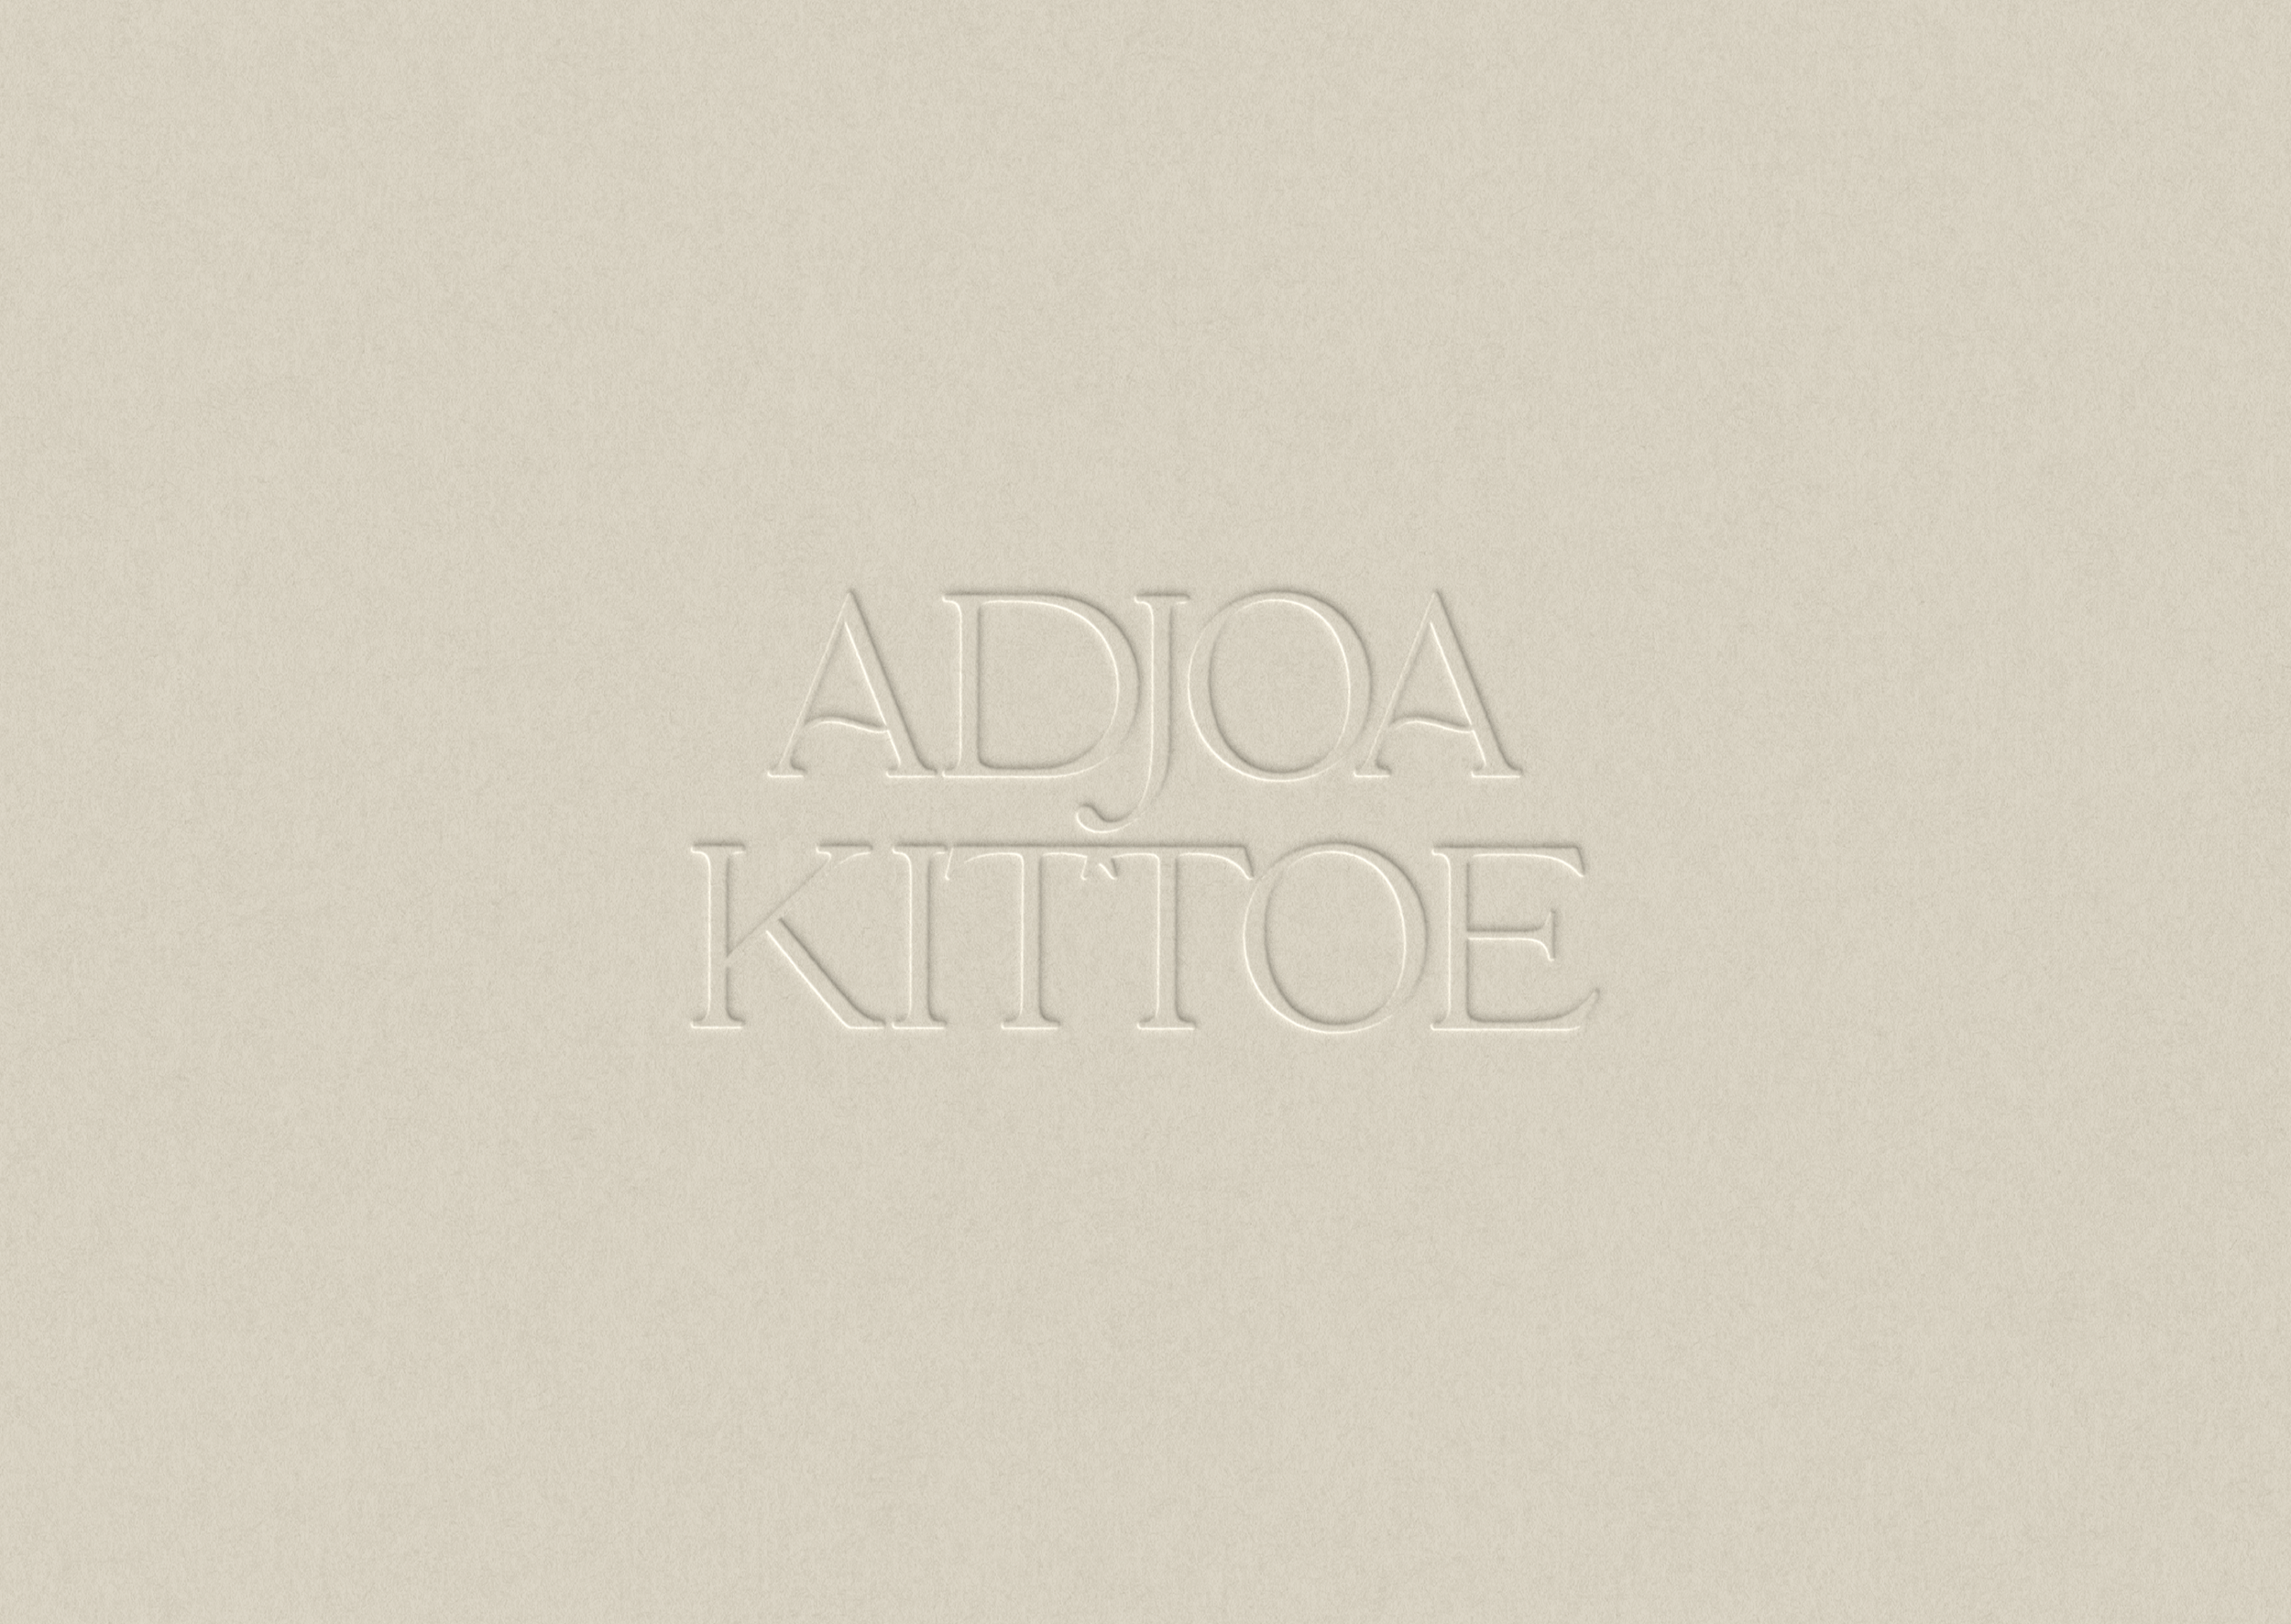 Adoja Kittoe by OneTen The Studio 9.png